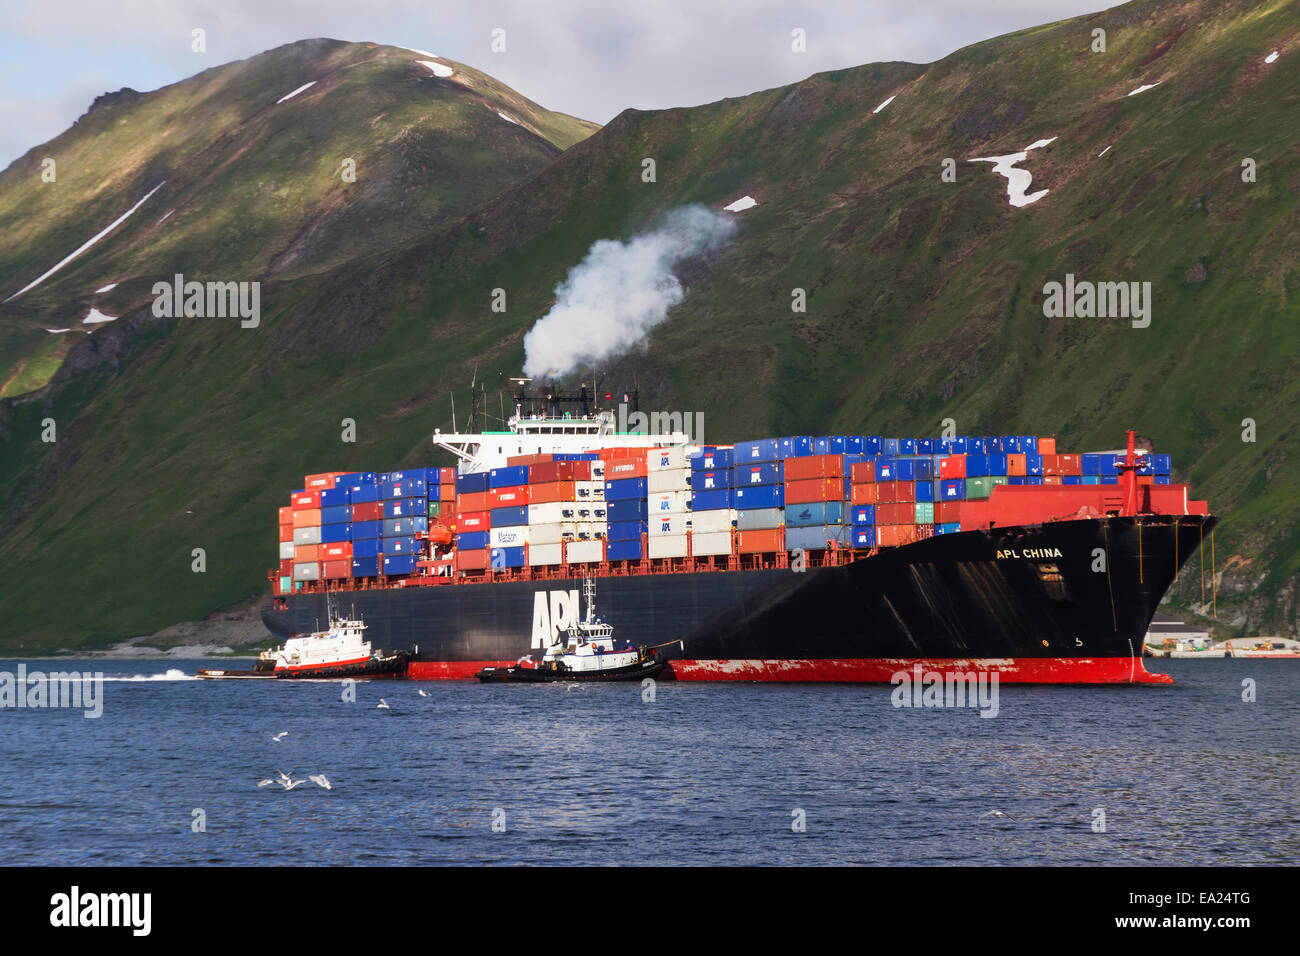 American President Lines container vessel, APL China in Unalaska Bay, Unalaska, Alaska. Stock Photo